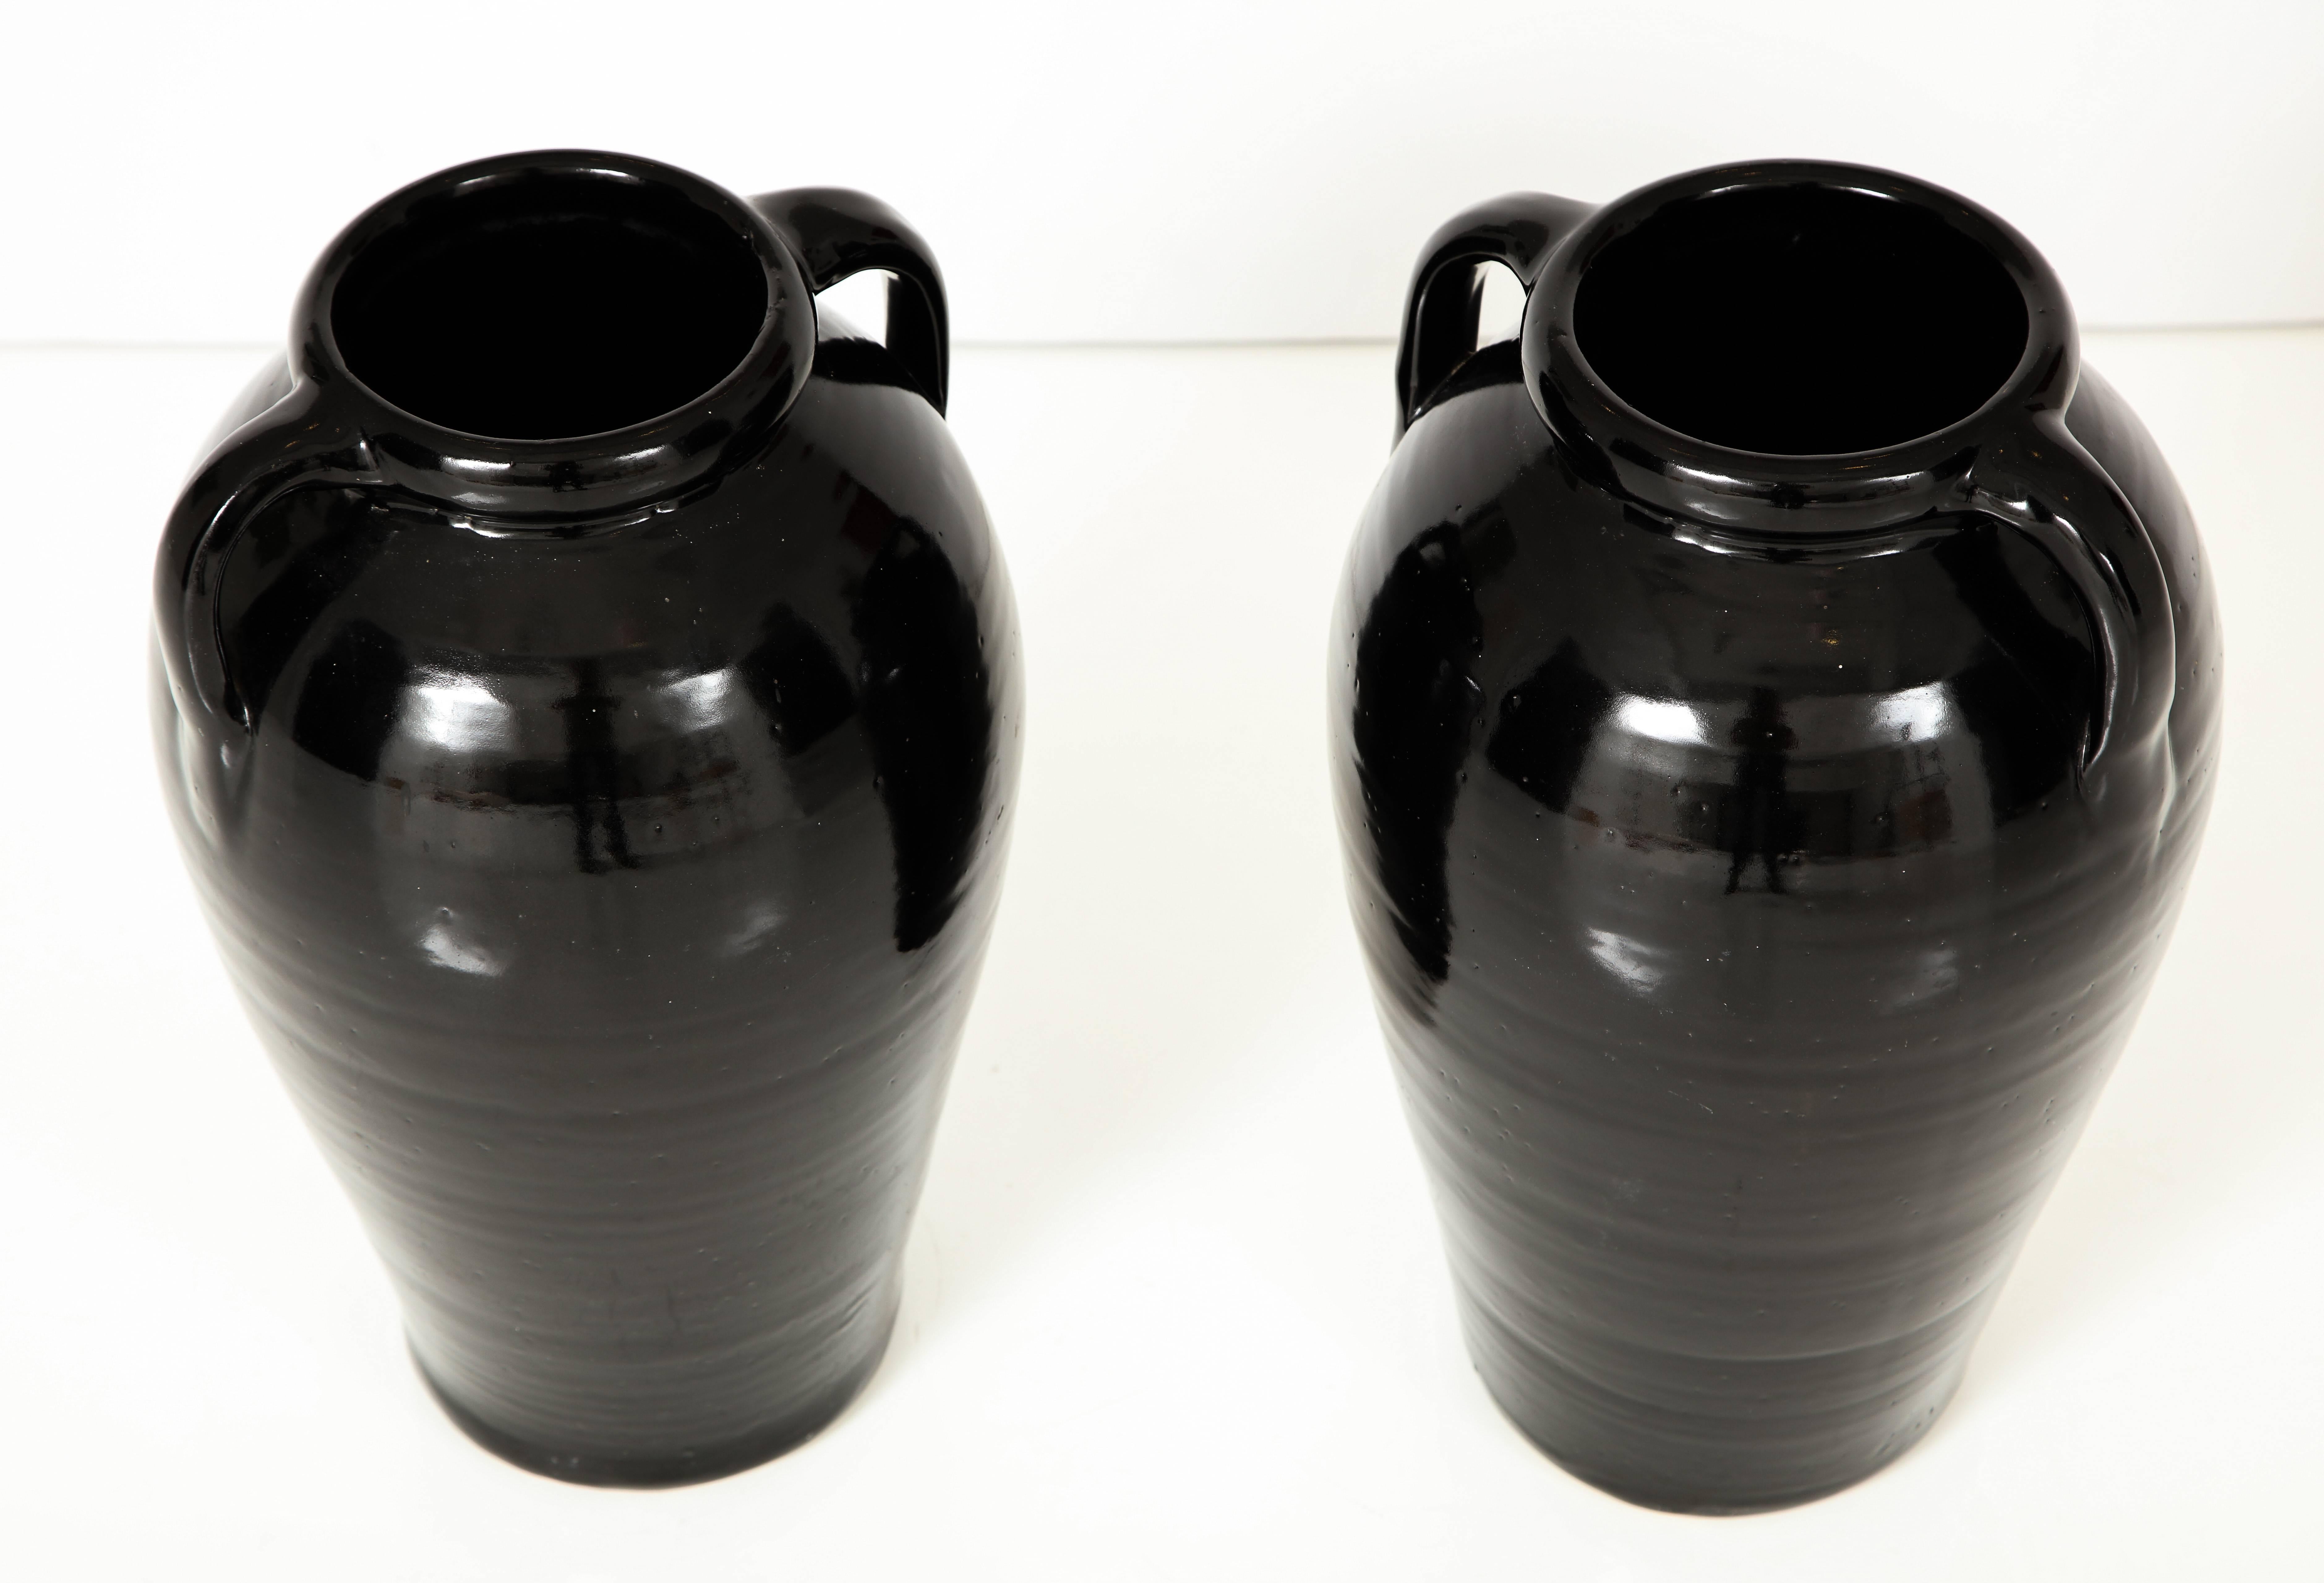 American Pair of Black Glazed Stone Ware Vases or Jars with Handles